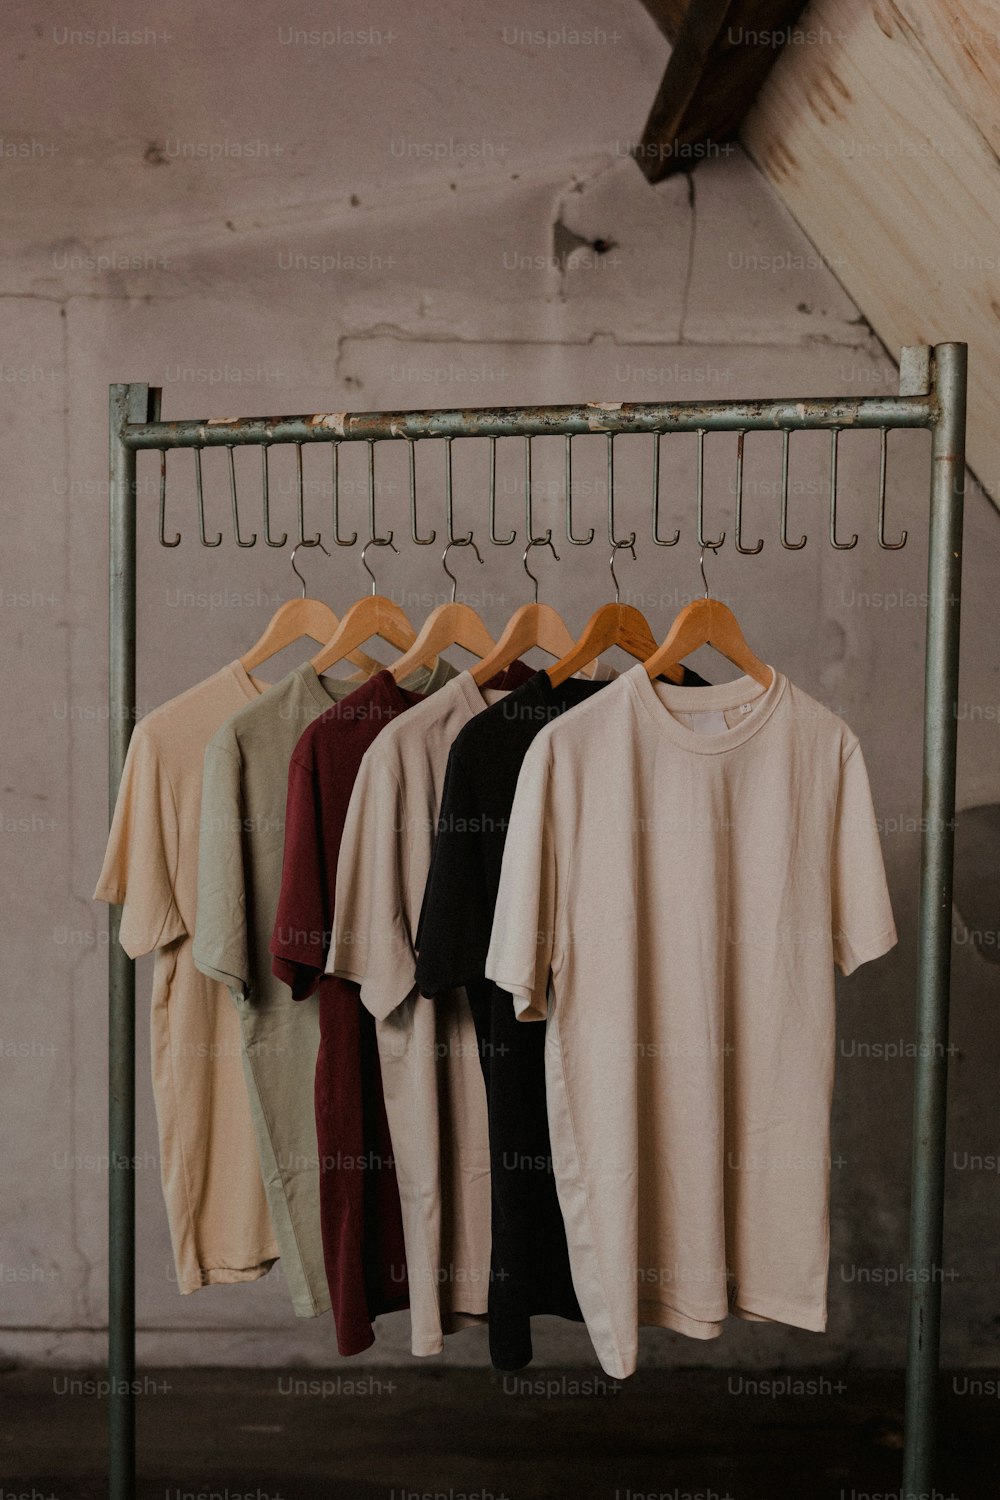 Premium Photo  Men plain shirts on hangers in a retail store